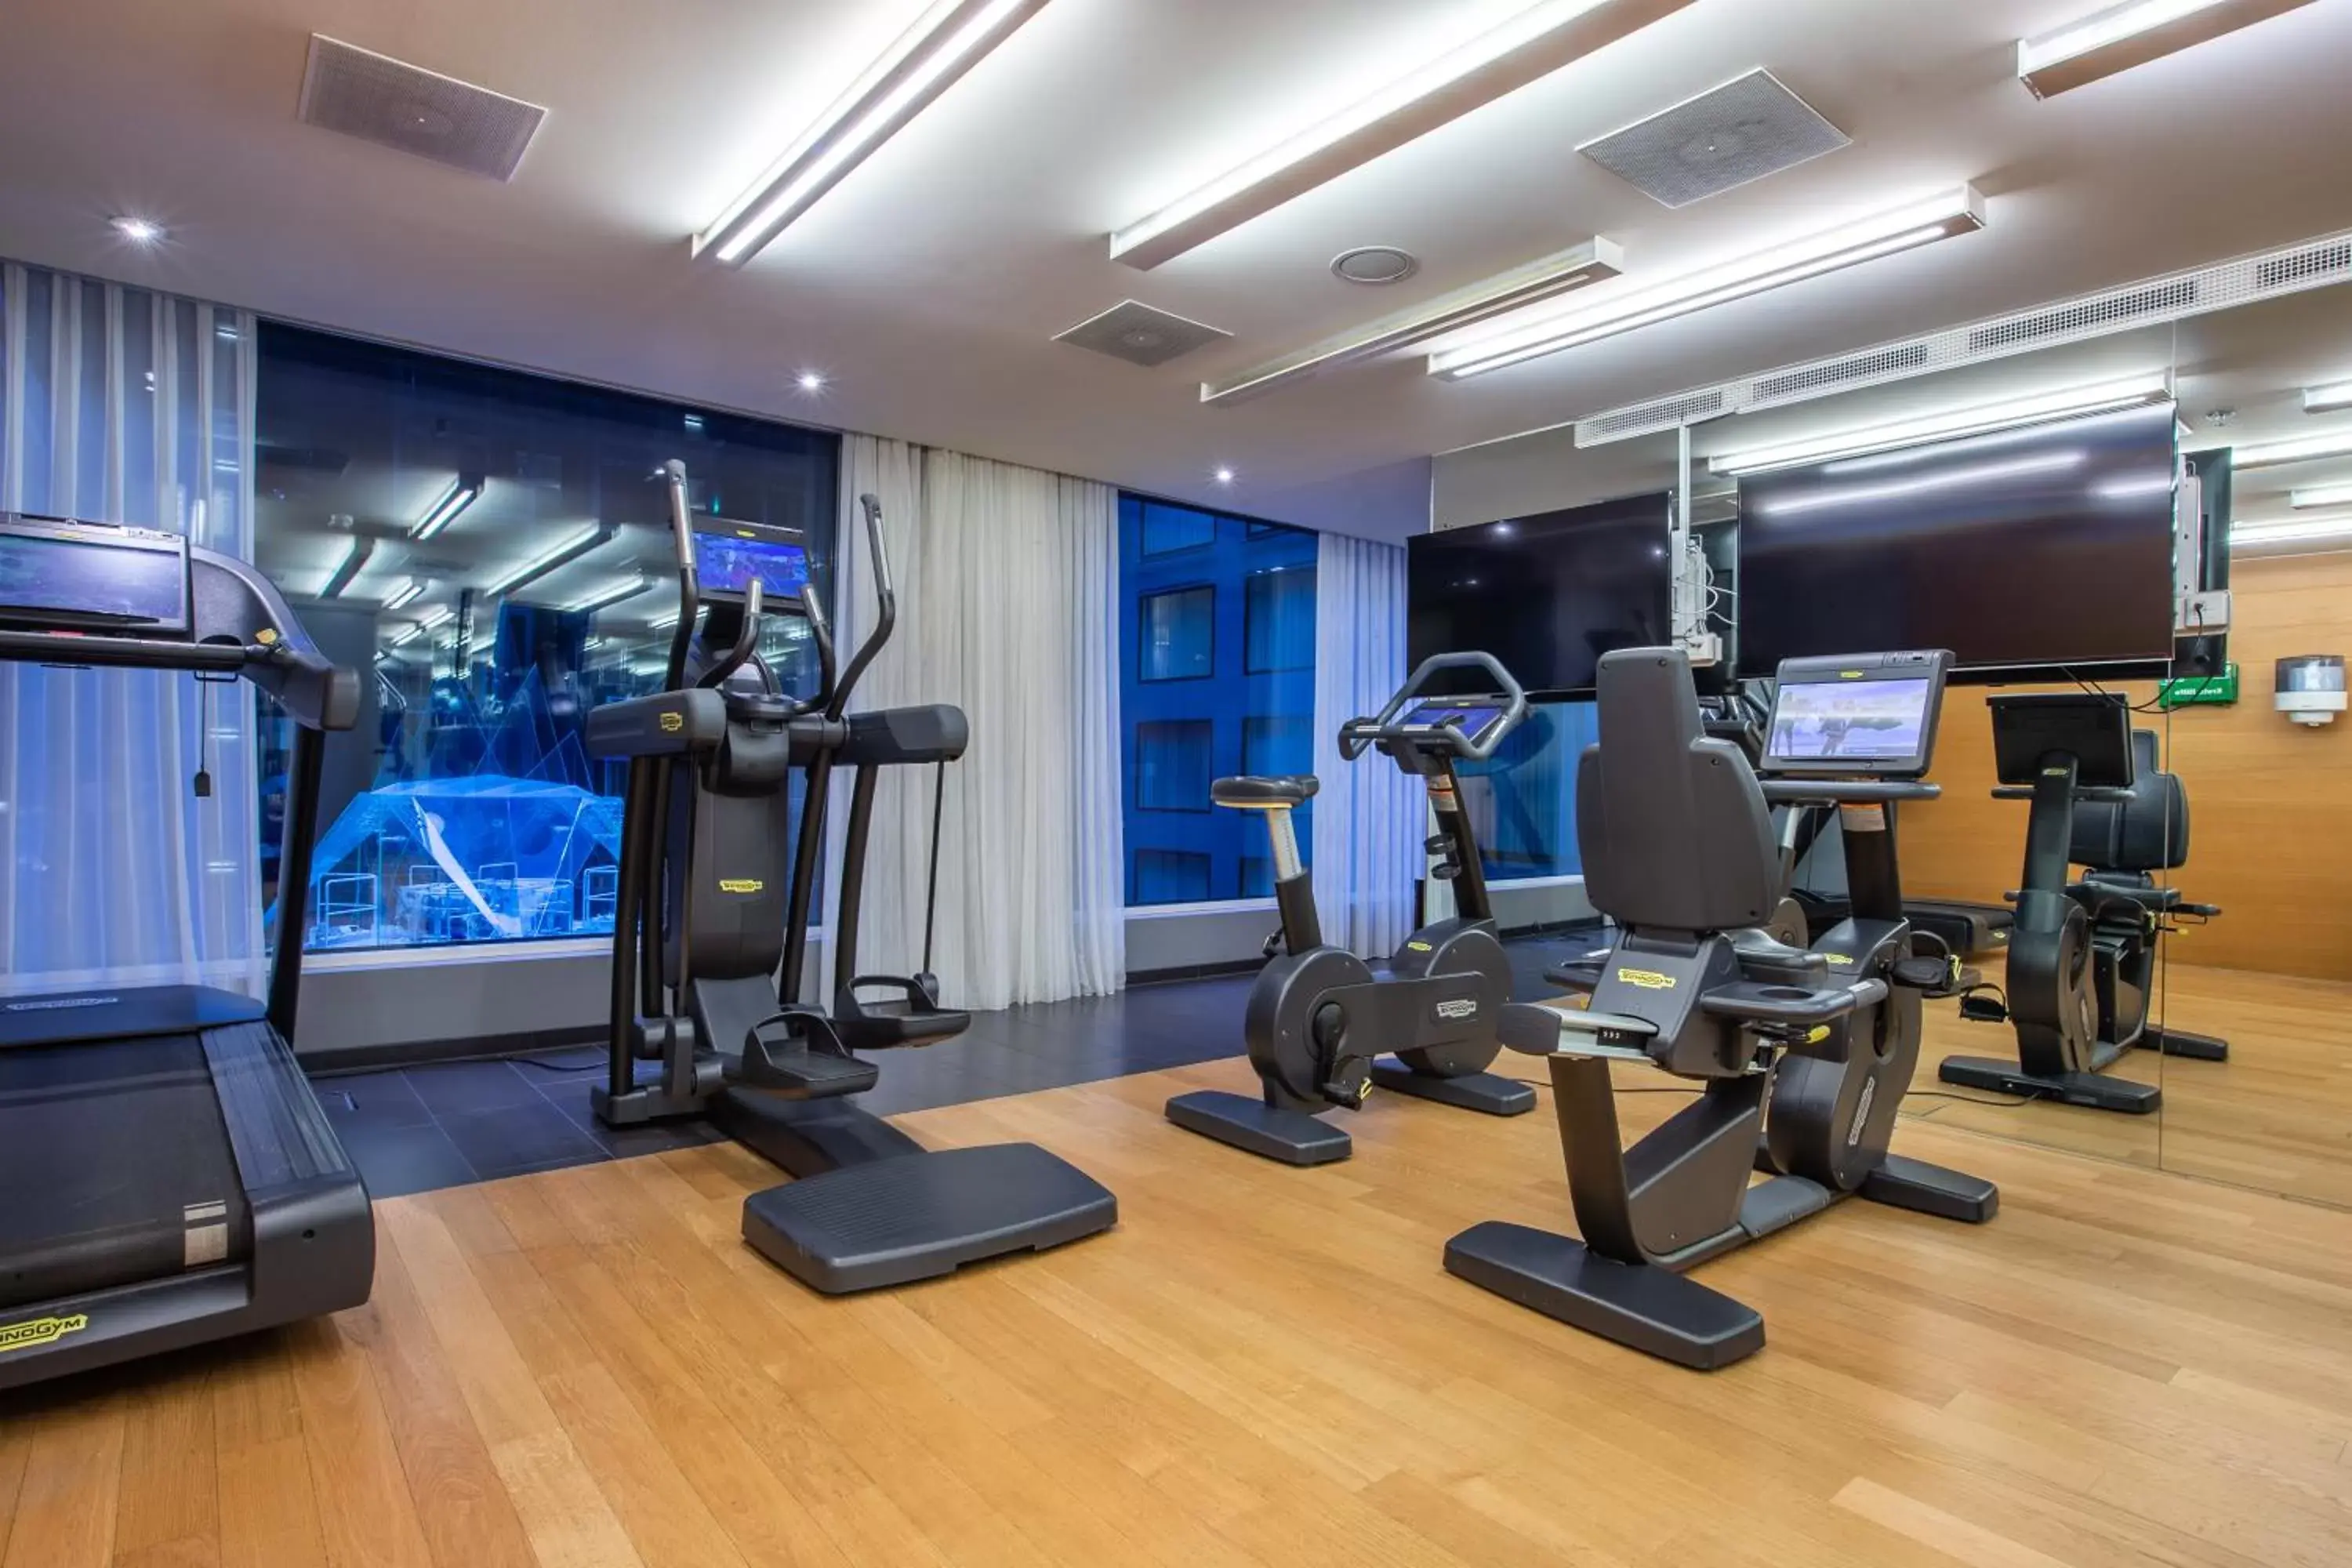 Fitness centre/facilities, Fitness Center/Facilities in Radisson Blu Hotel Zurich Airport